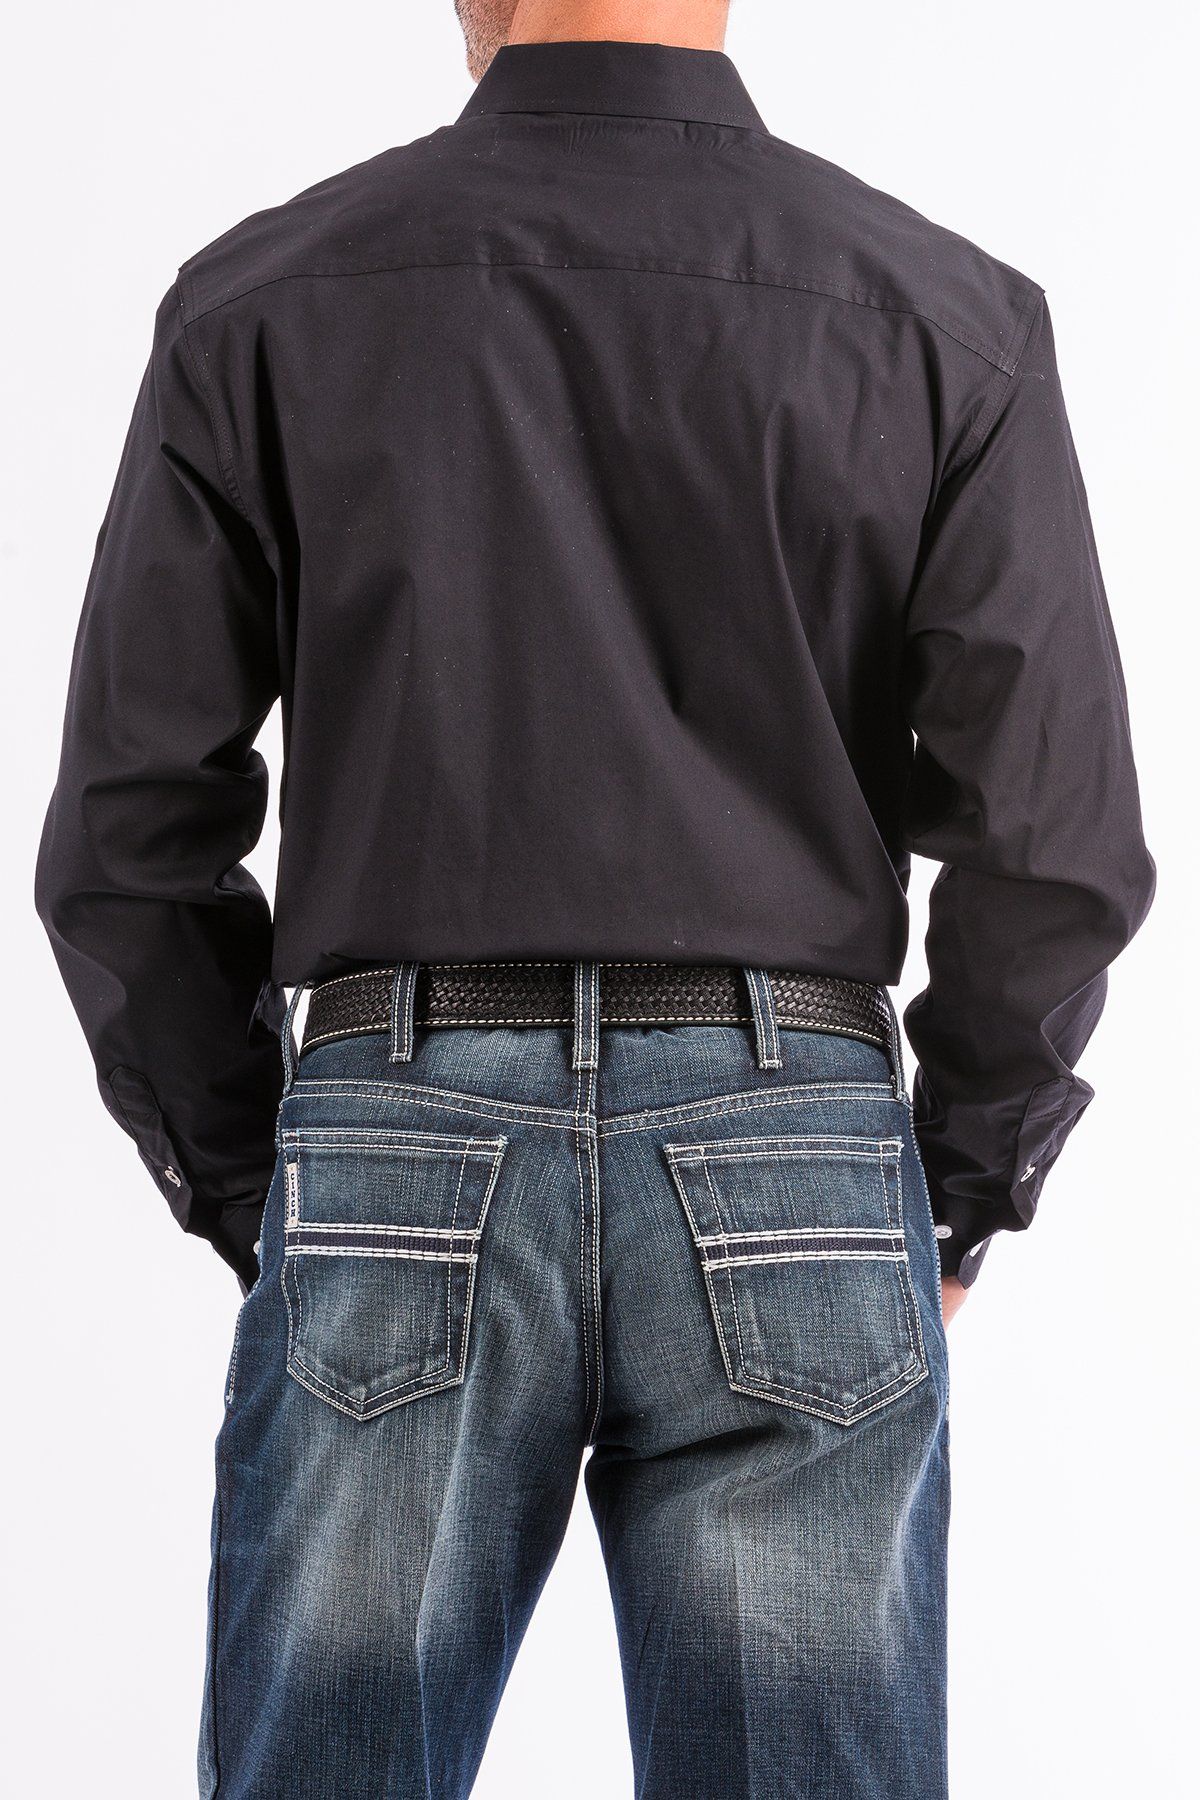 Men's Modern Fit Black Button-Down Shirt